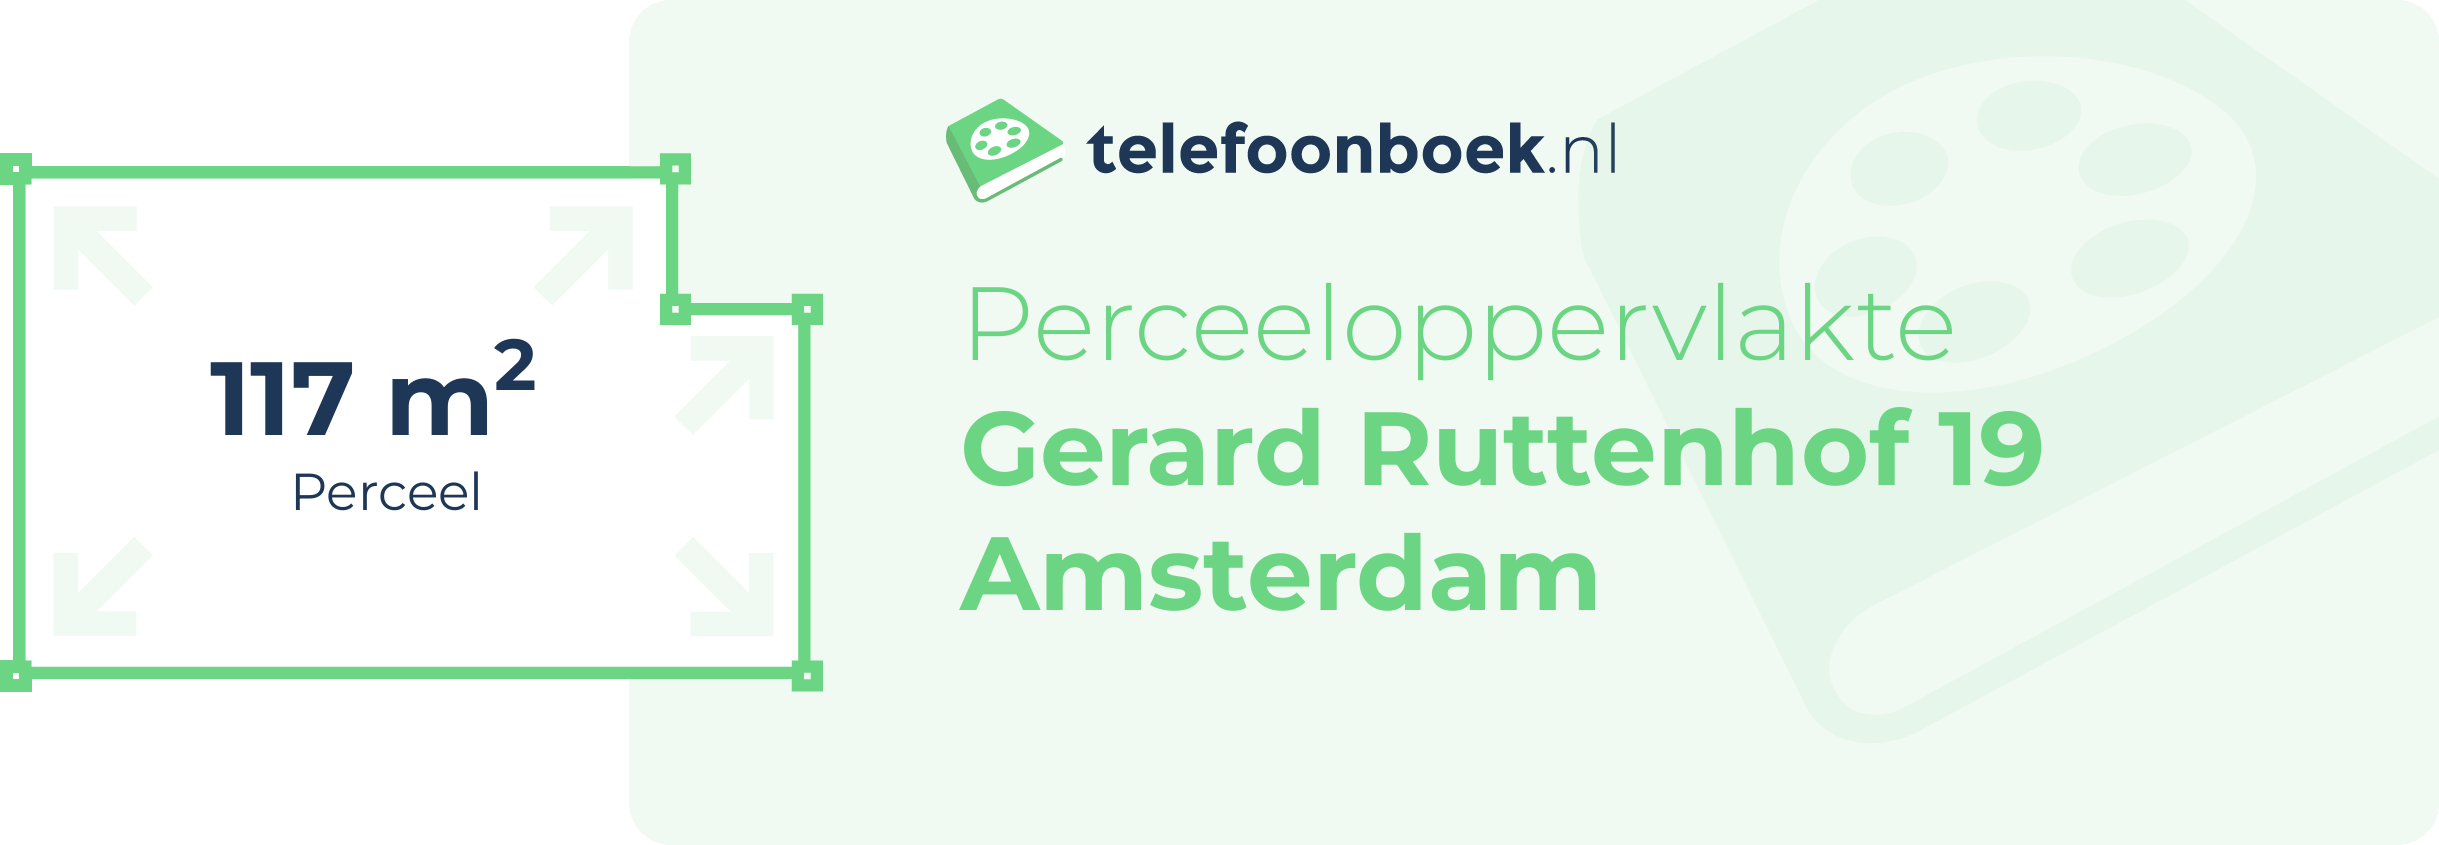 Perceeloppervlakte Gerard Ruttenhof 19 Amsterdam